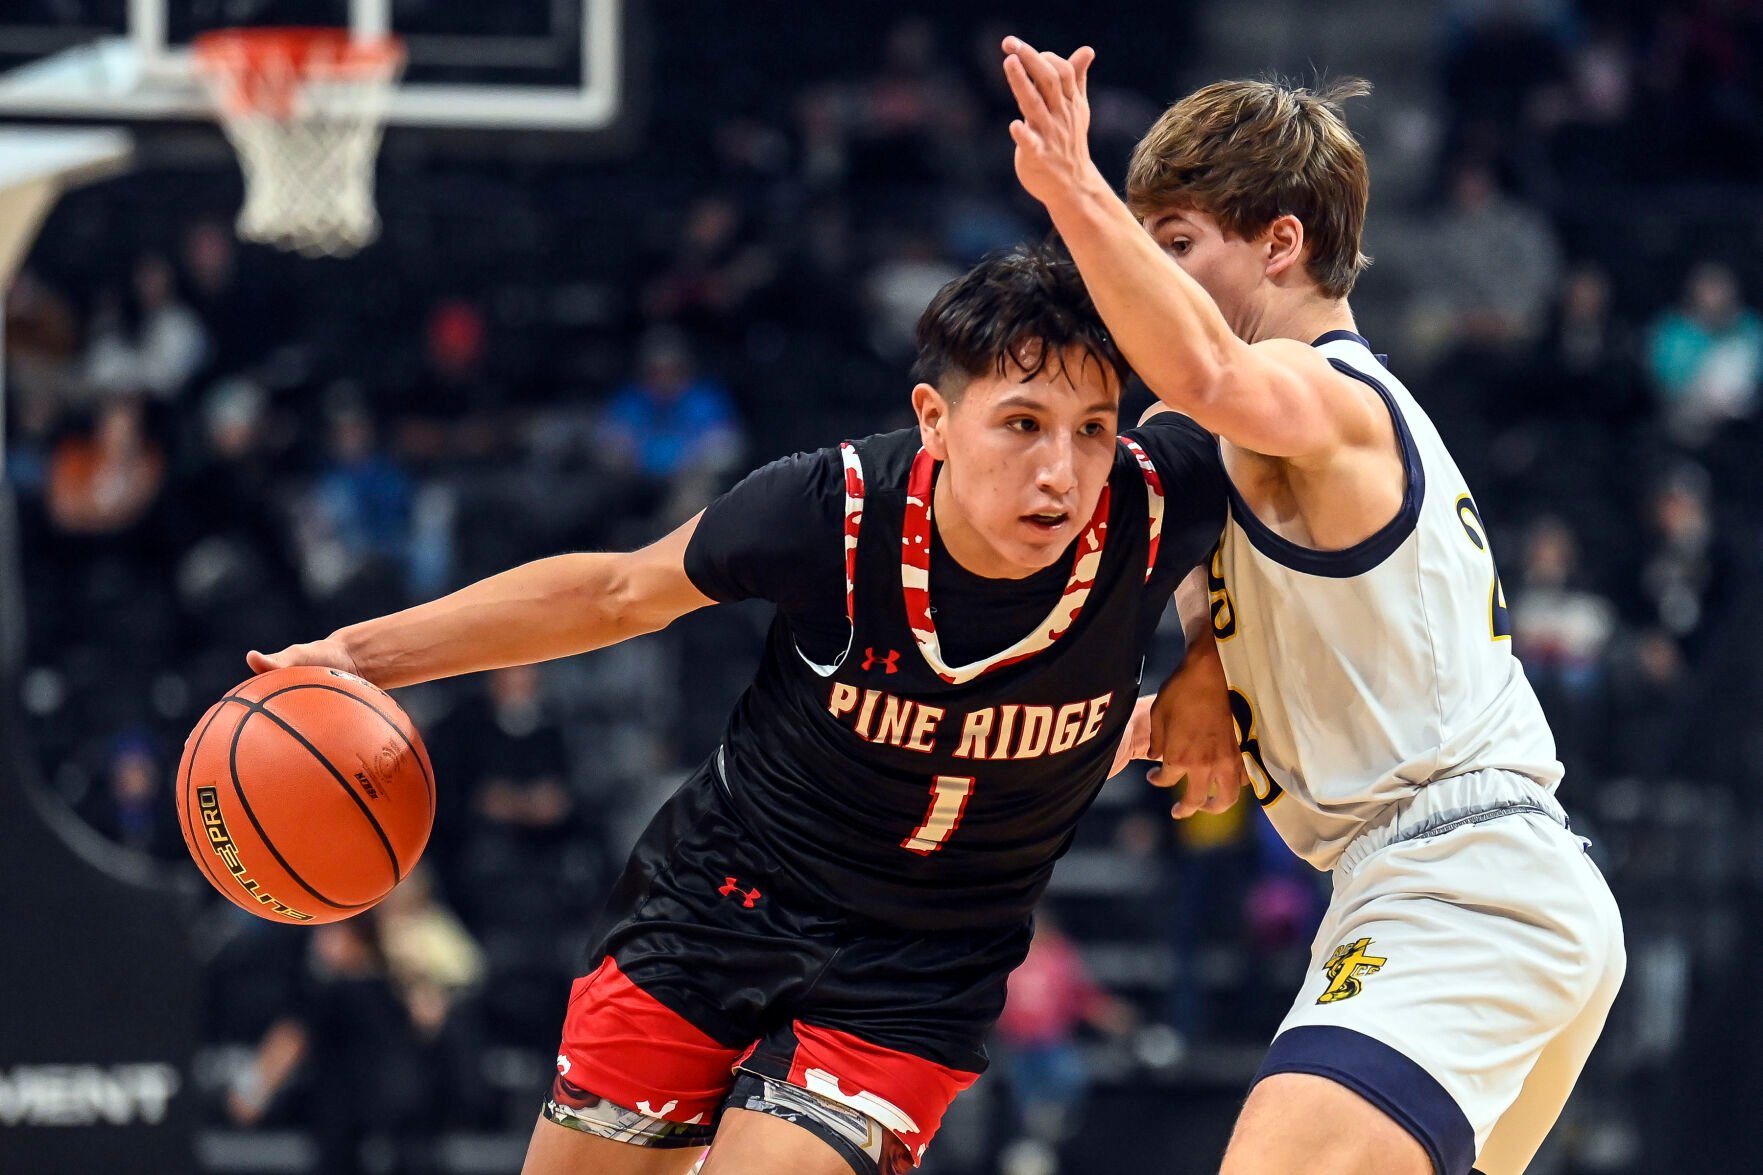 High School Basketball Media Poll: Pine Ridge Boys Hold No. 3 Spot with 18-1 Record